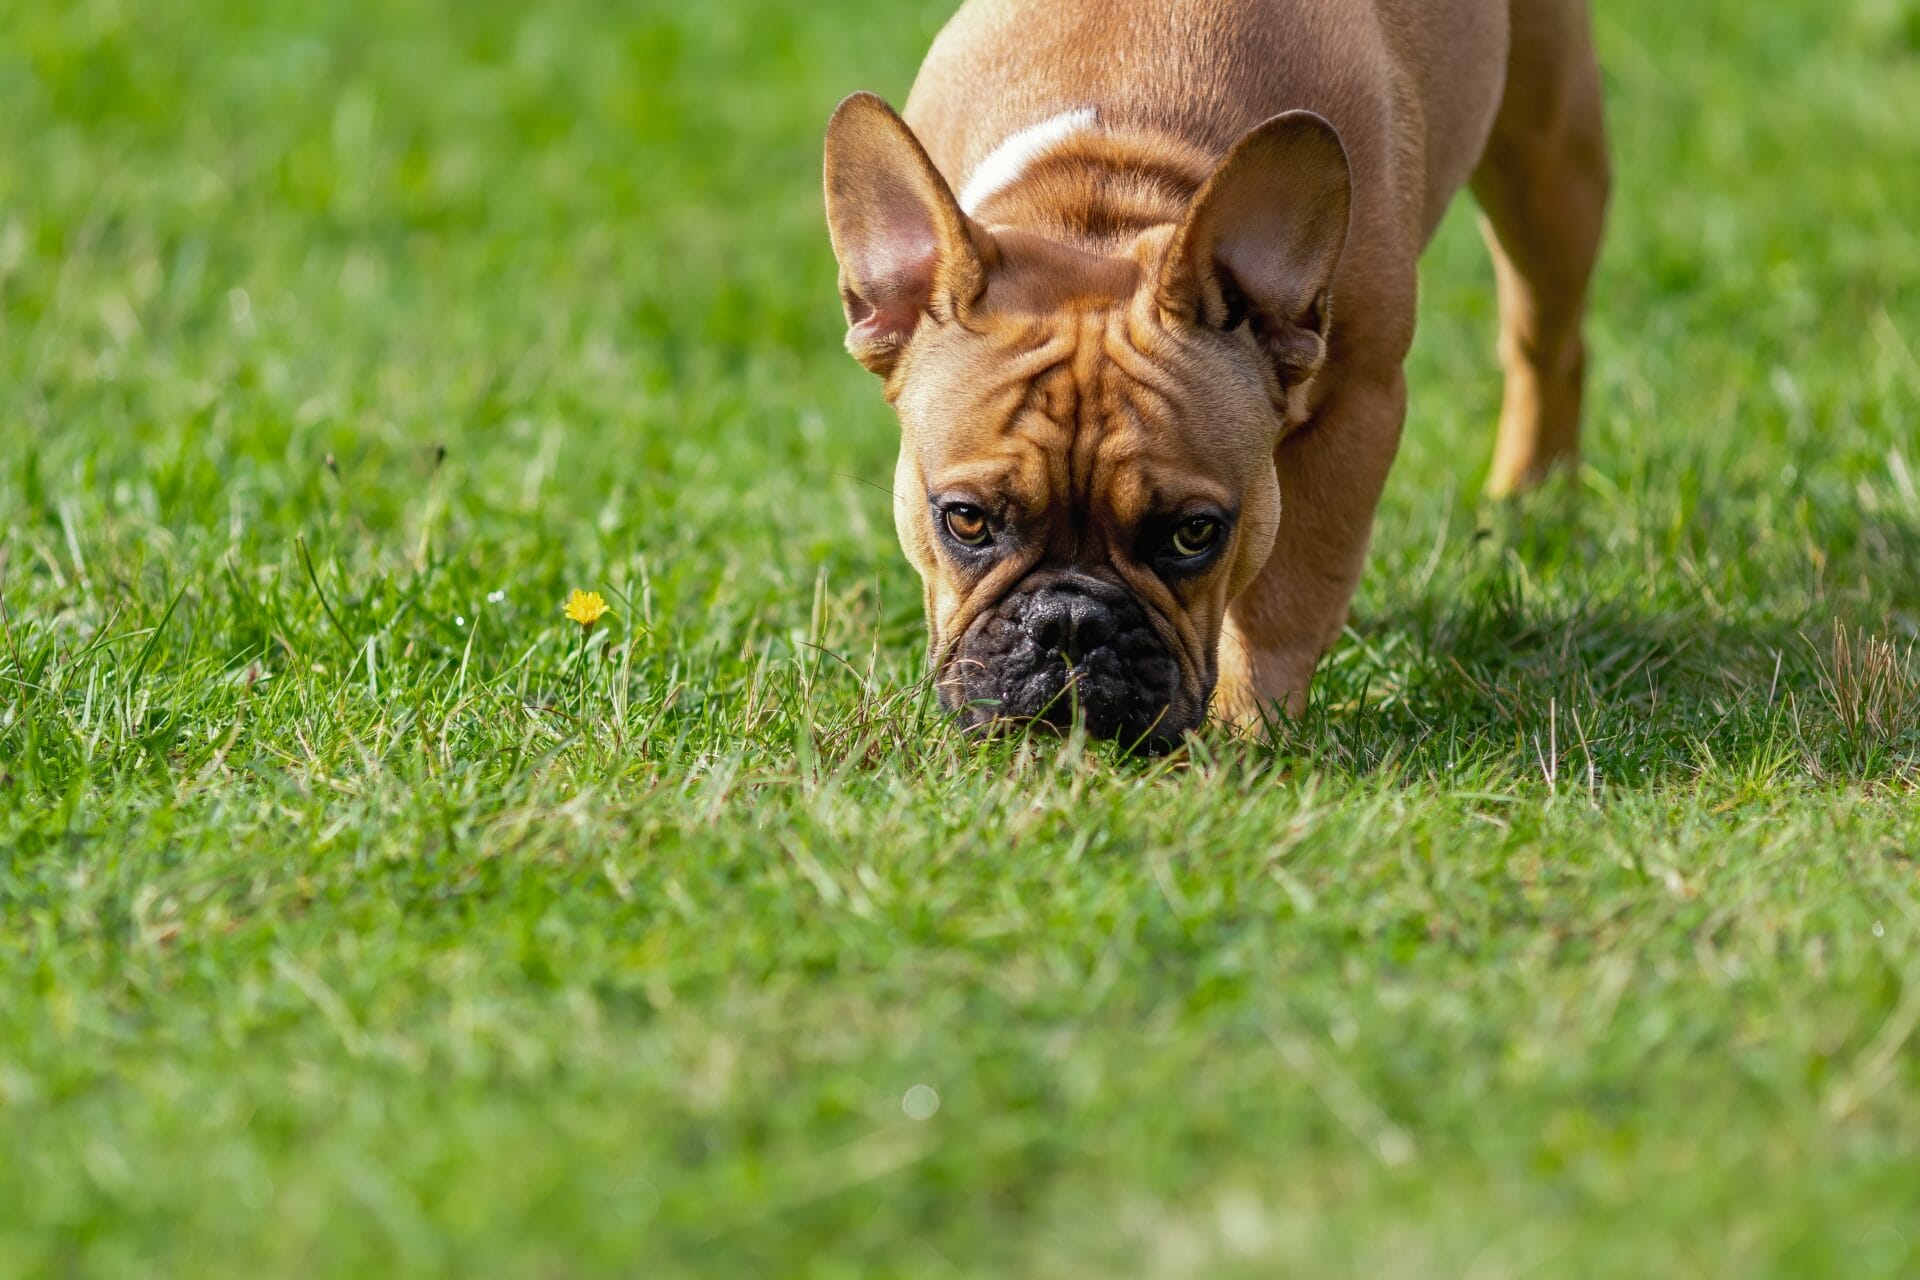 bulldog dogs eat grass outside